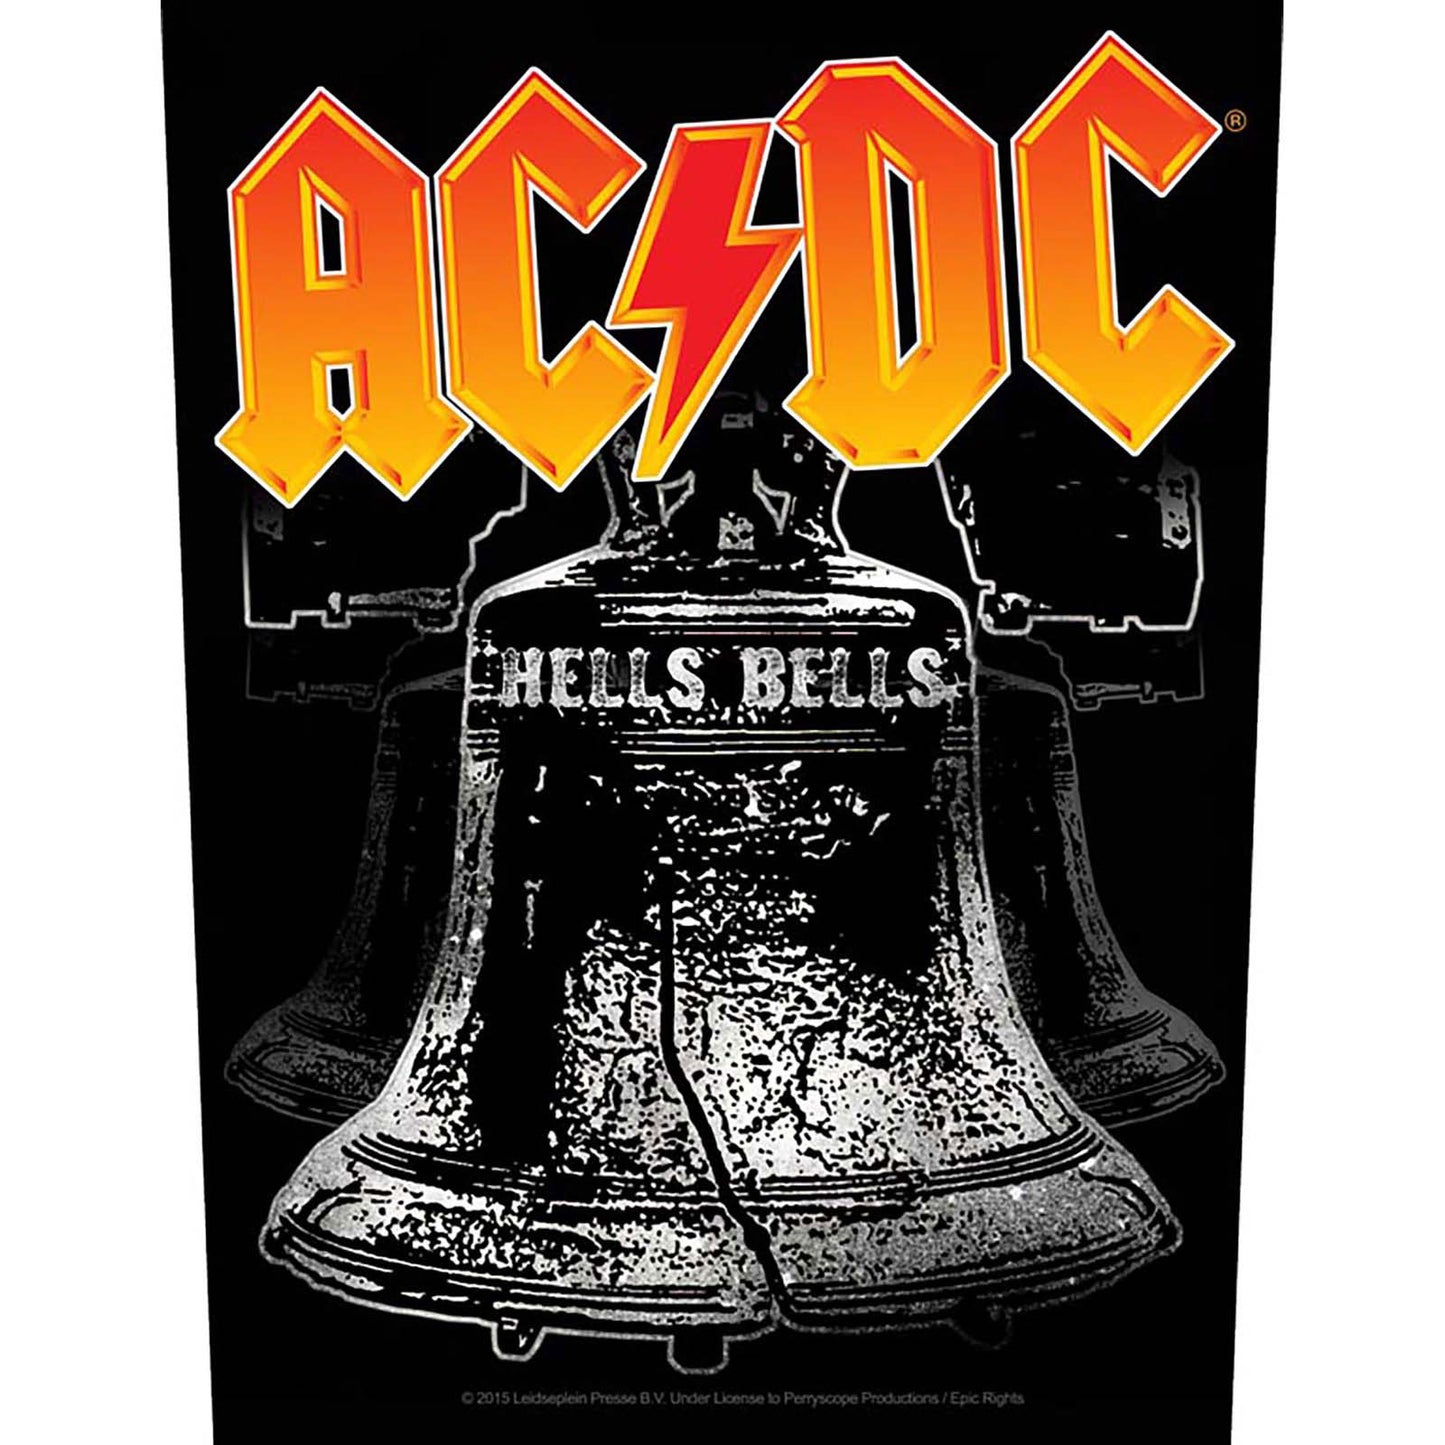 AC/DC Back Patch: Hells Bells